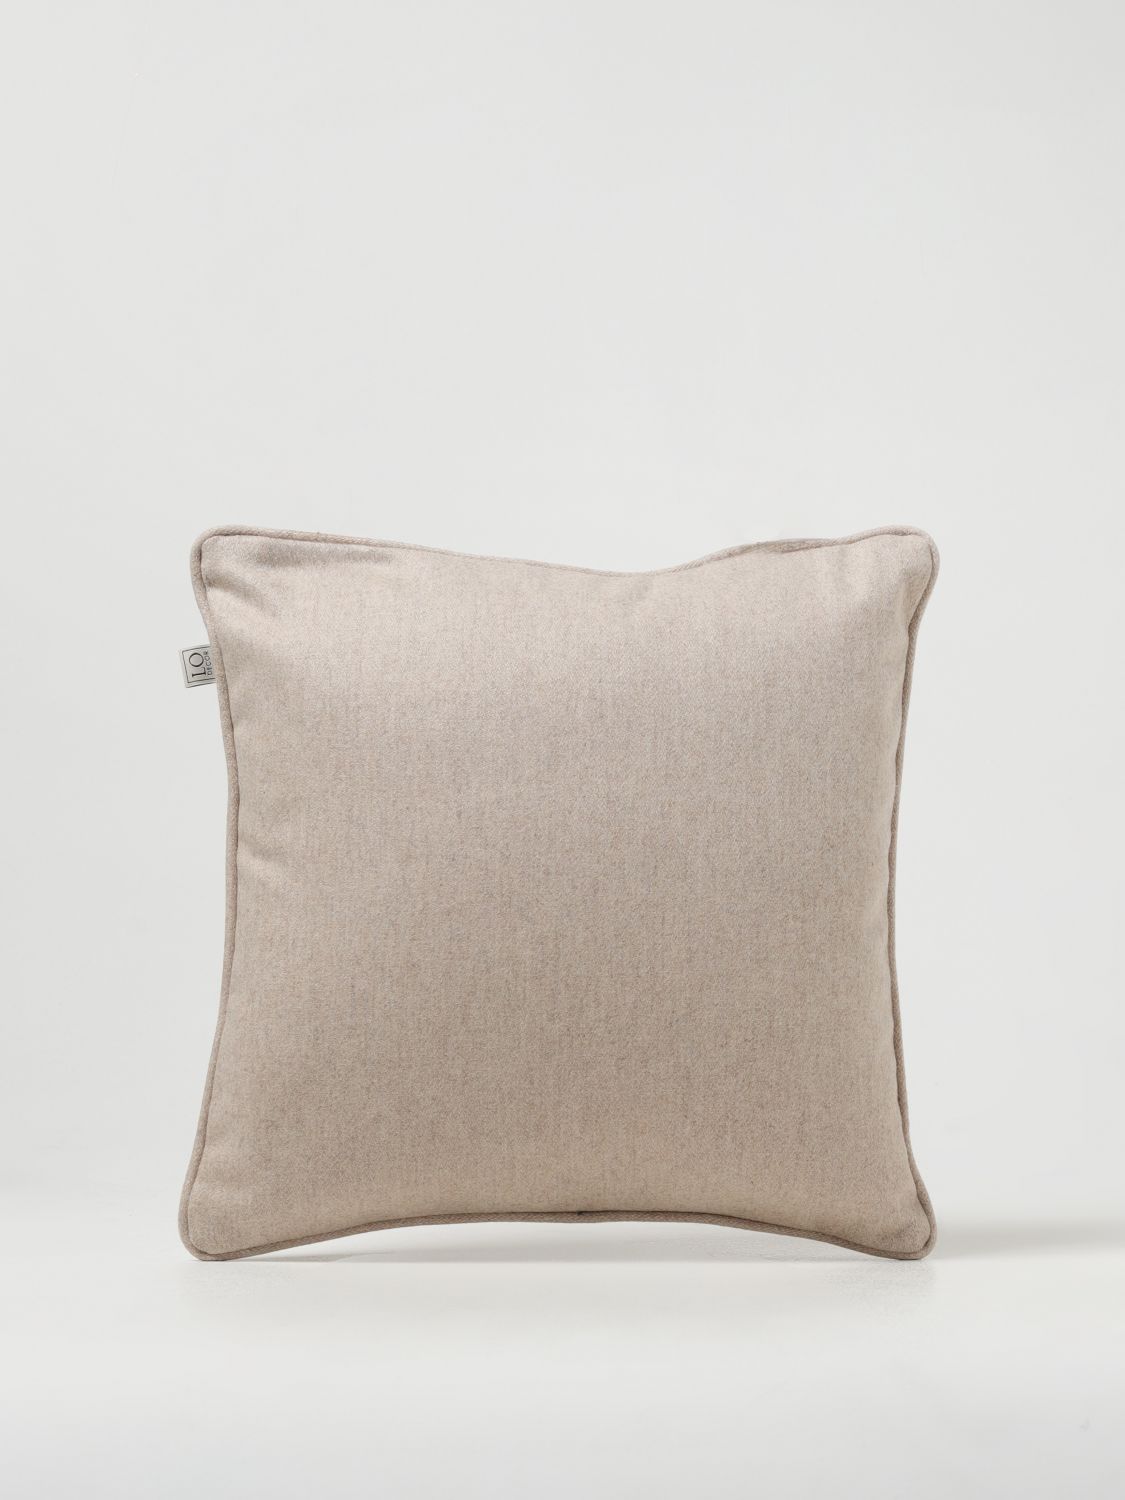  Cushions LO DECOR Lifestyle color Beige